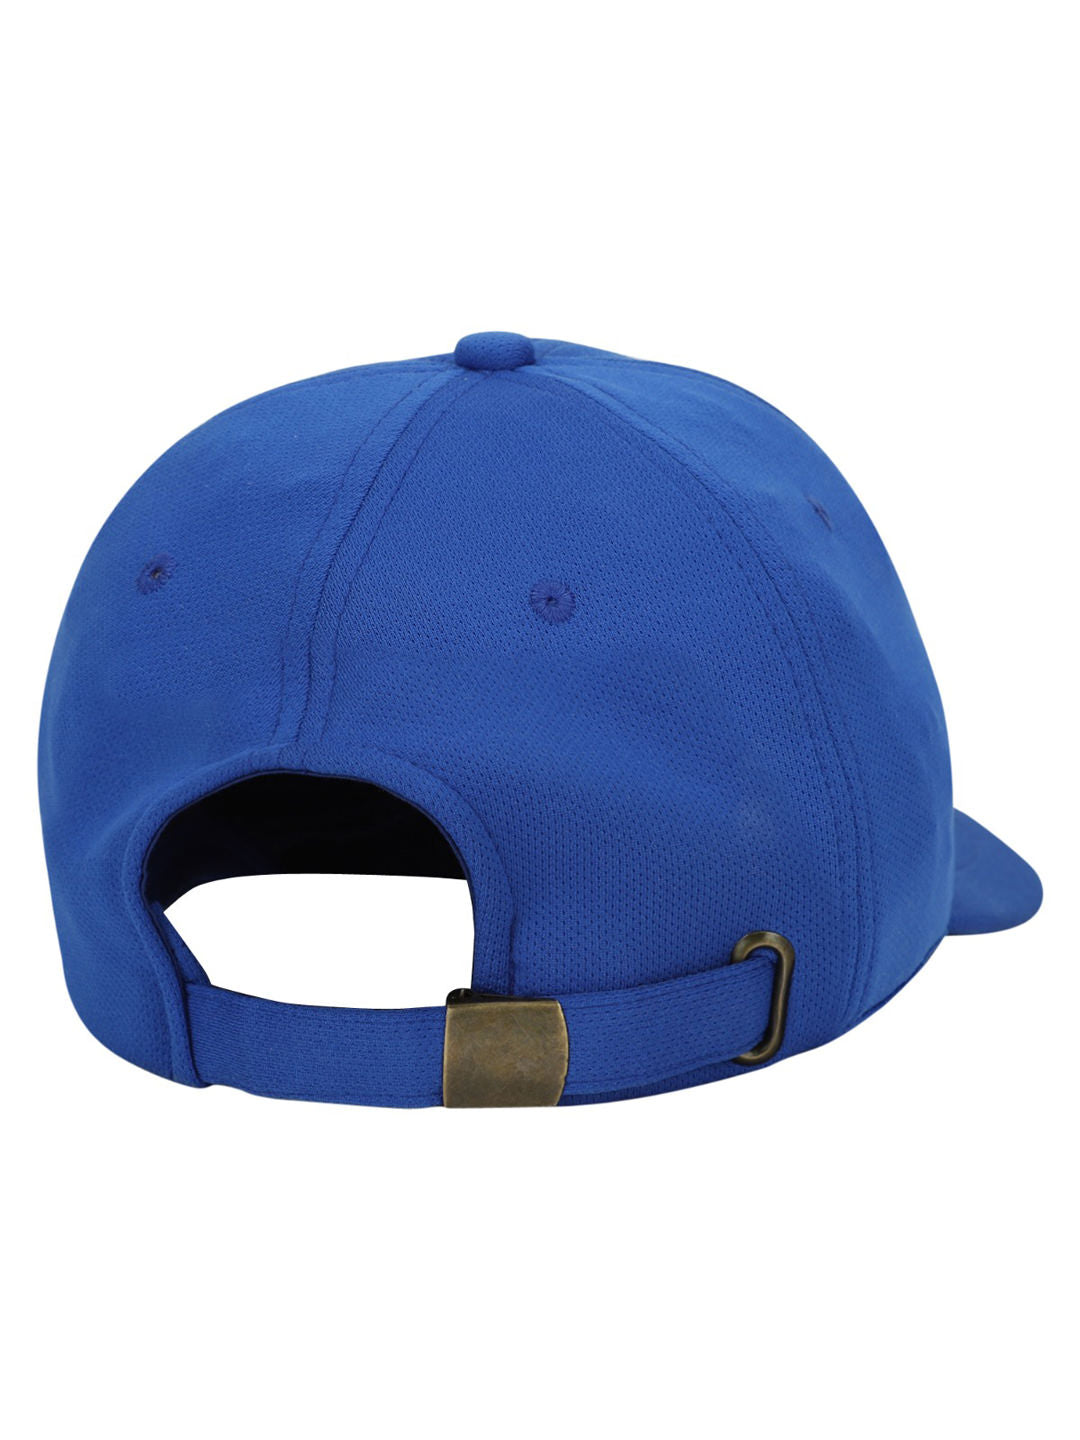 Rajasthan Royals Unisex Fanwear Cap RRFANCP001-M-Blue